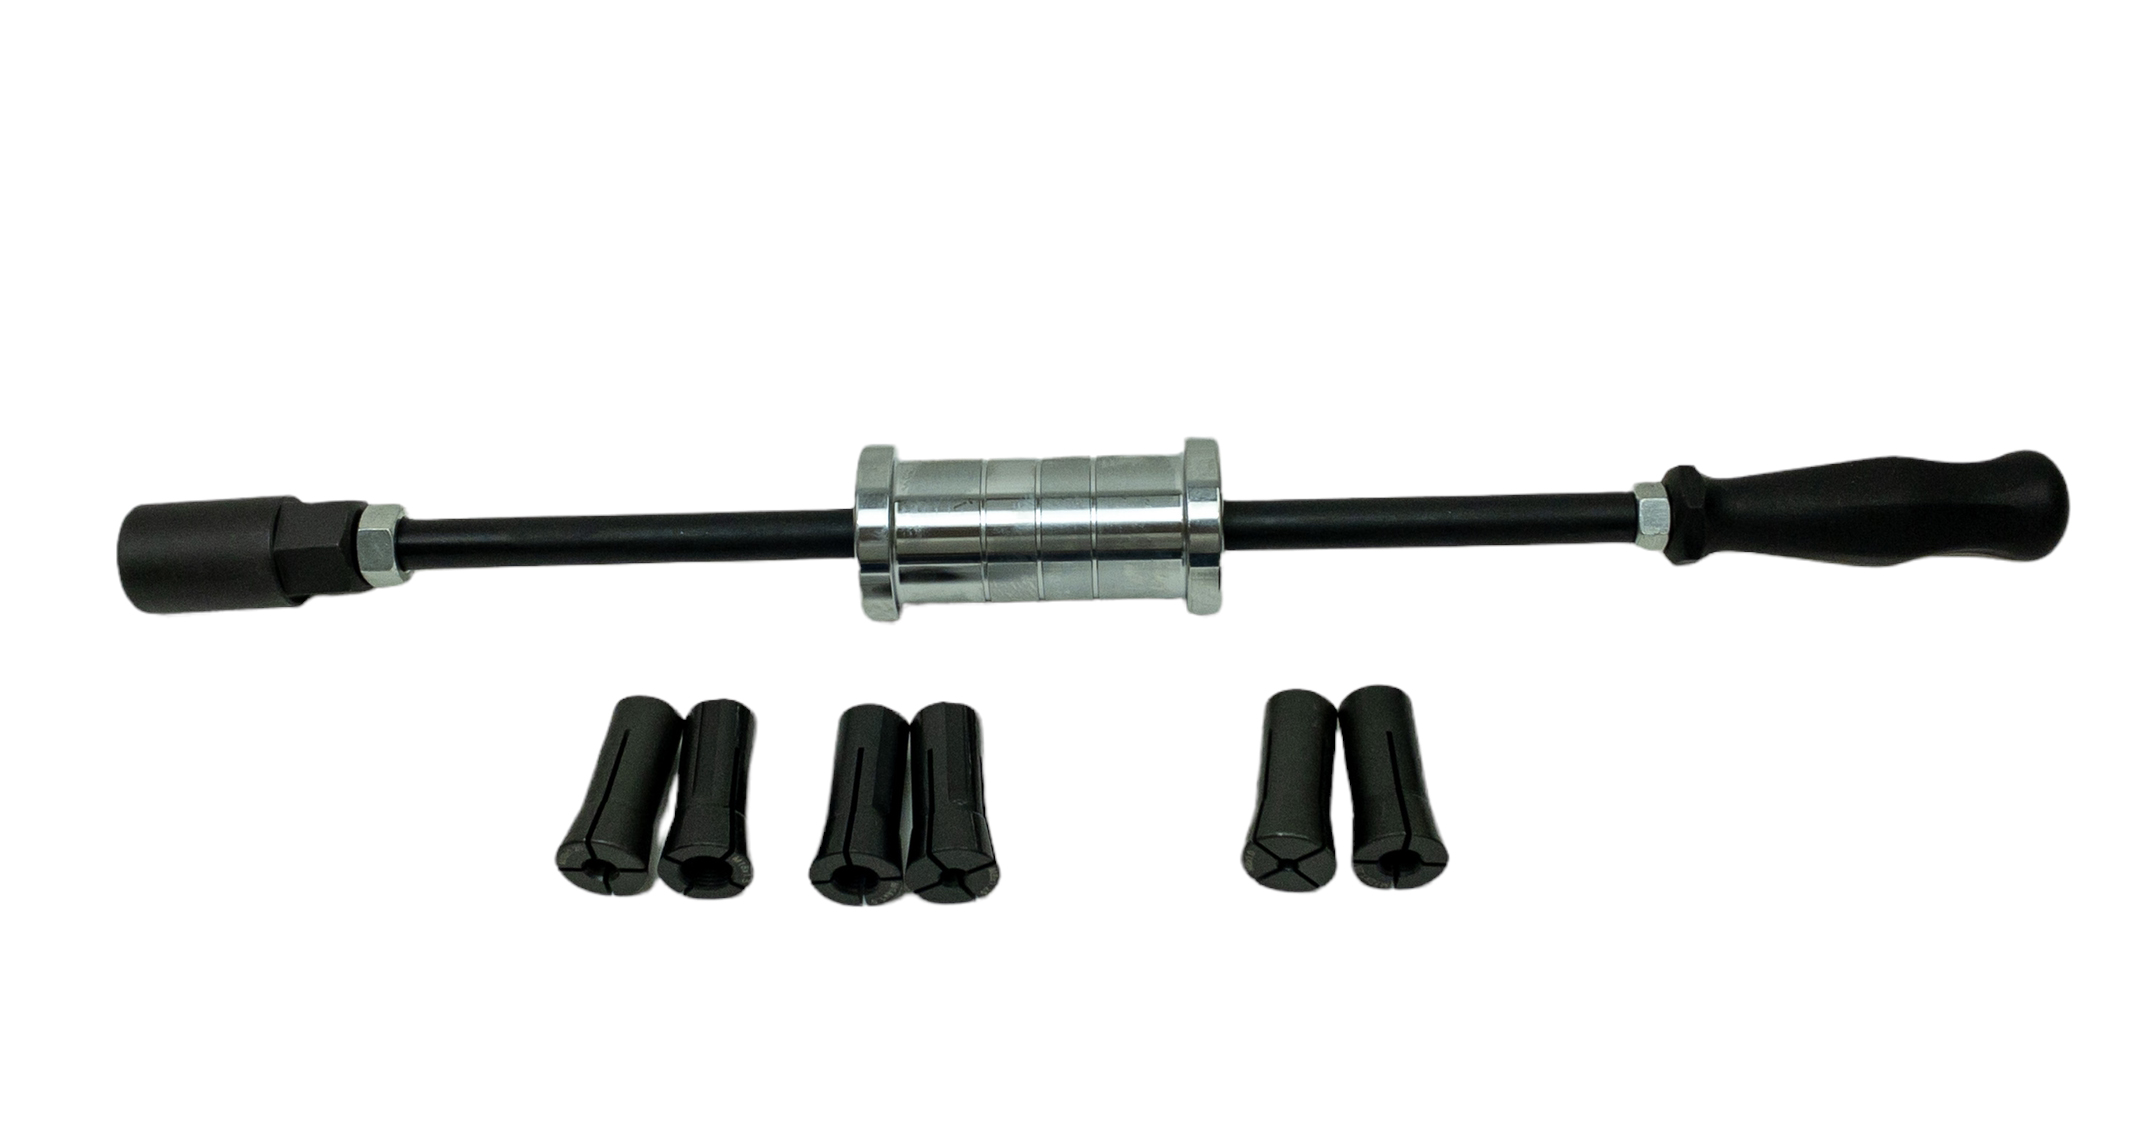 ATCCATS0260 Metric Dowel Pin Puller Kit 6, 8, 10, 12, 14, 16 mm